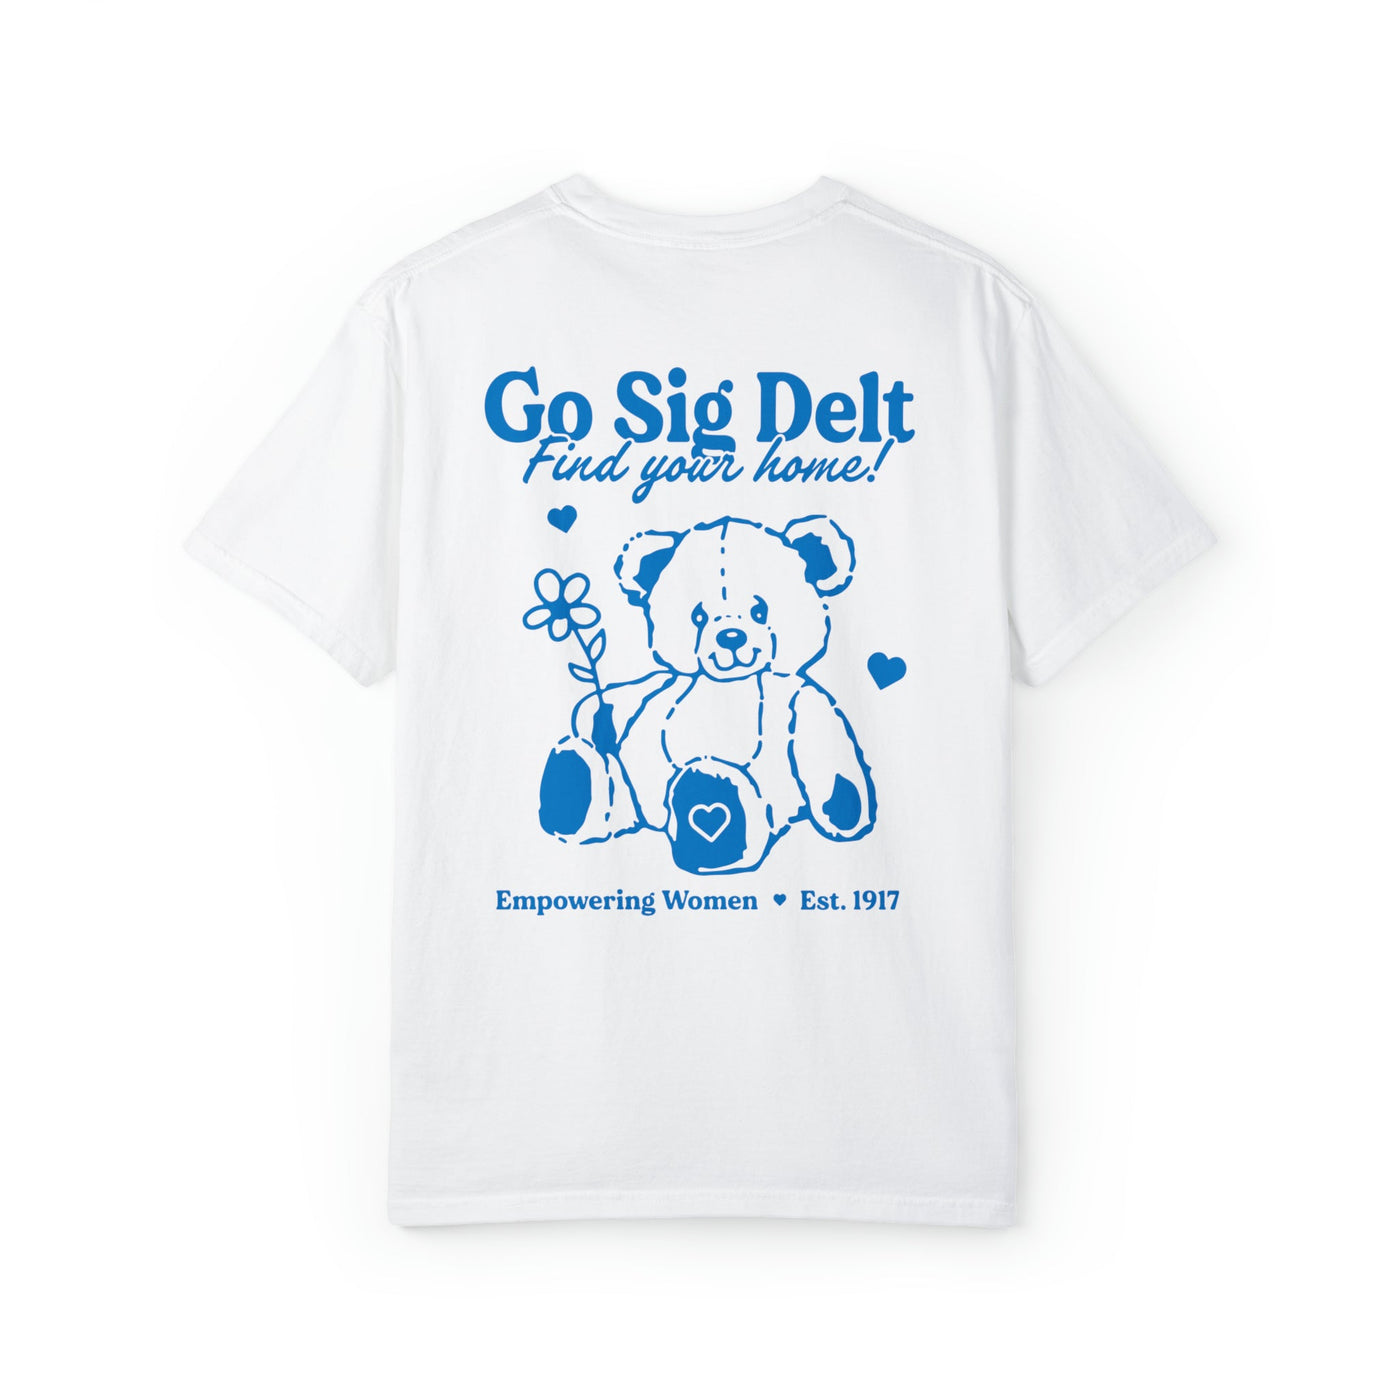 Sigma Delta Tau Teddy Bear Sorority T-shirt